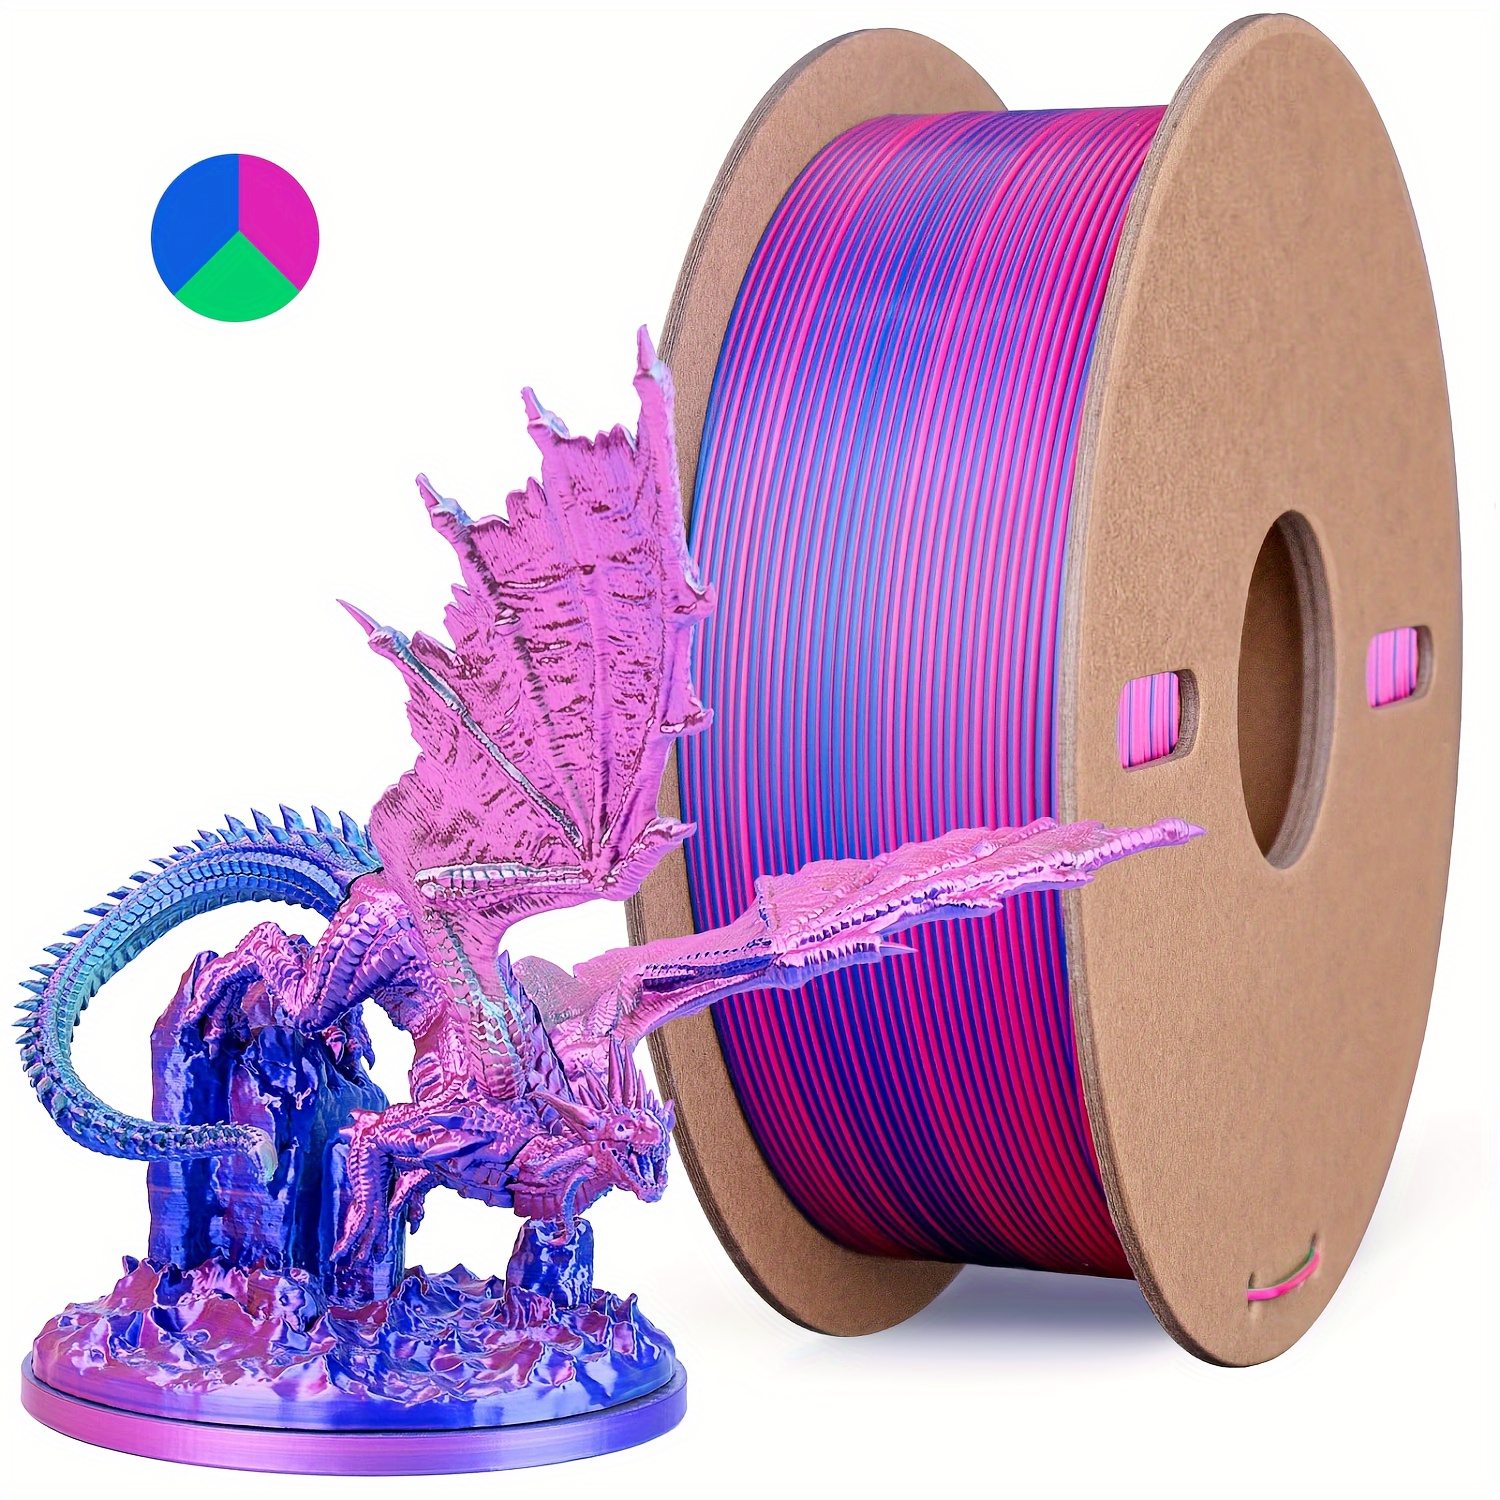 3D Printer Universe Premium PLA Filament